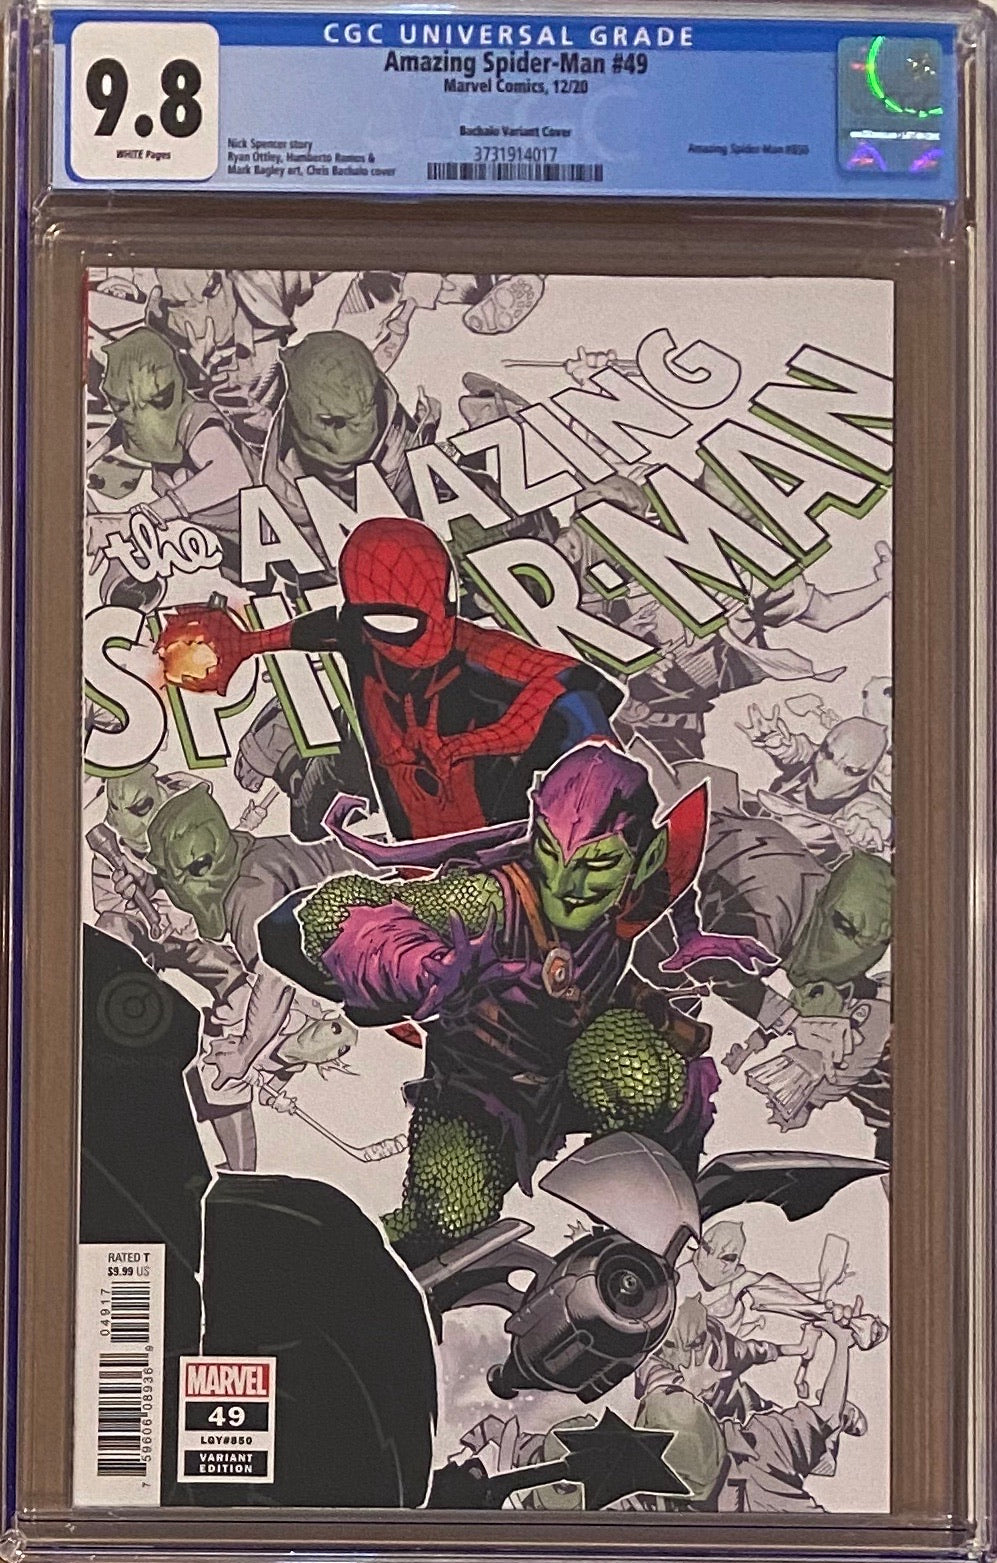 Amazing Spider-Man #850 (#49) Bachalo Variant CGC 9.8